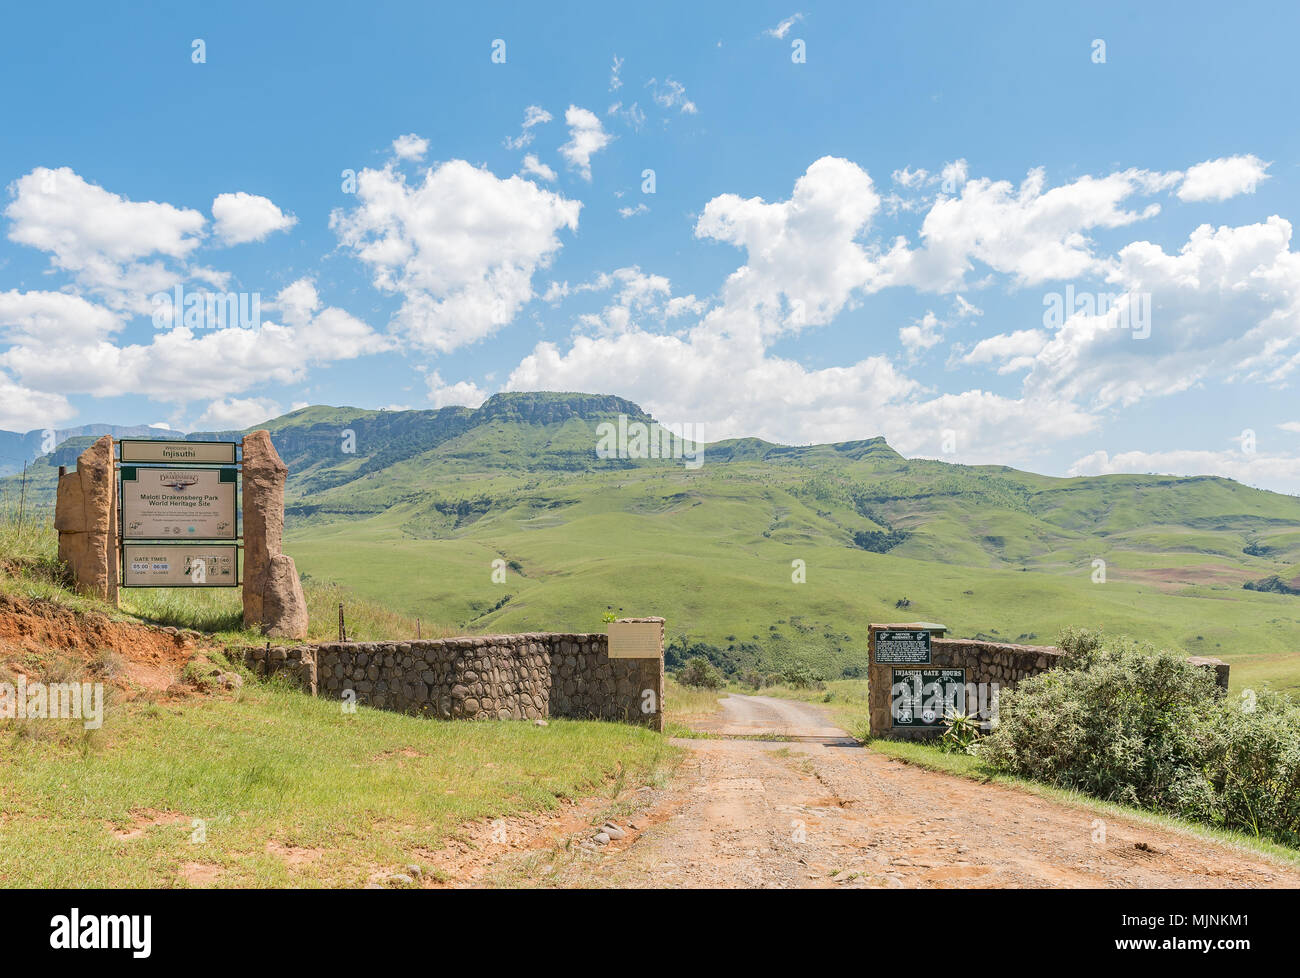 INJISUTHI, SÜDAFRIKA - 19. MÄRZ 2018: Das Eingangstor zu Injisuthi im Abschnitt Giants Castle der Maloti Drakensberg Park Stockfoto